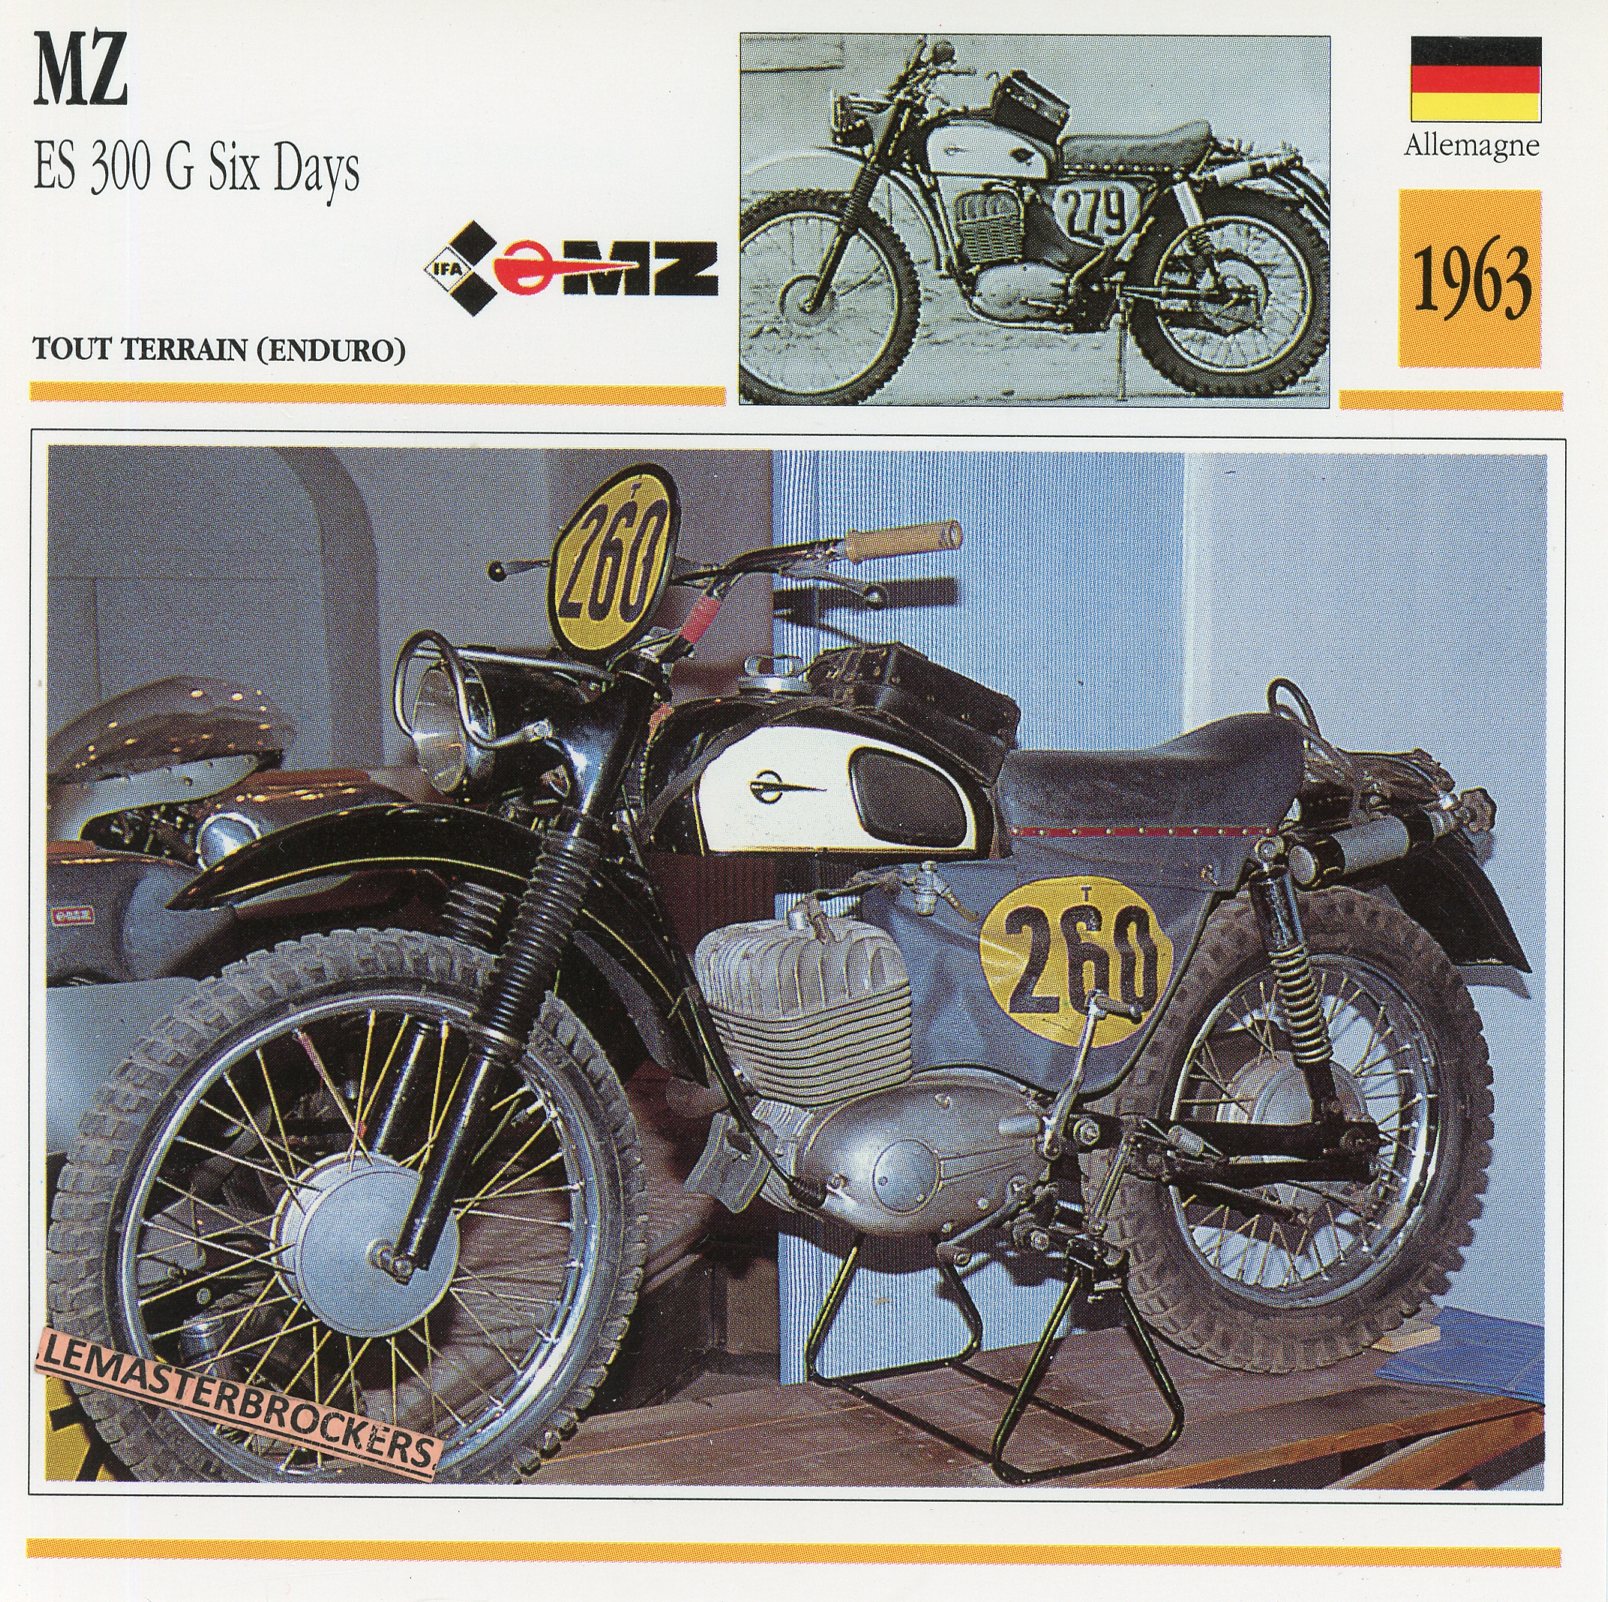 FICHE-MOTO-MZ-ES300-1963-LEMASTERBROCKERS